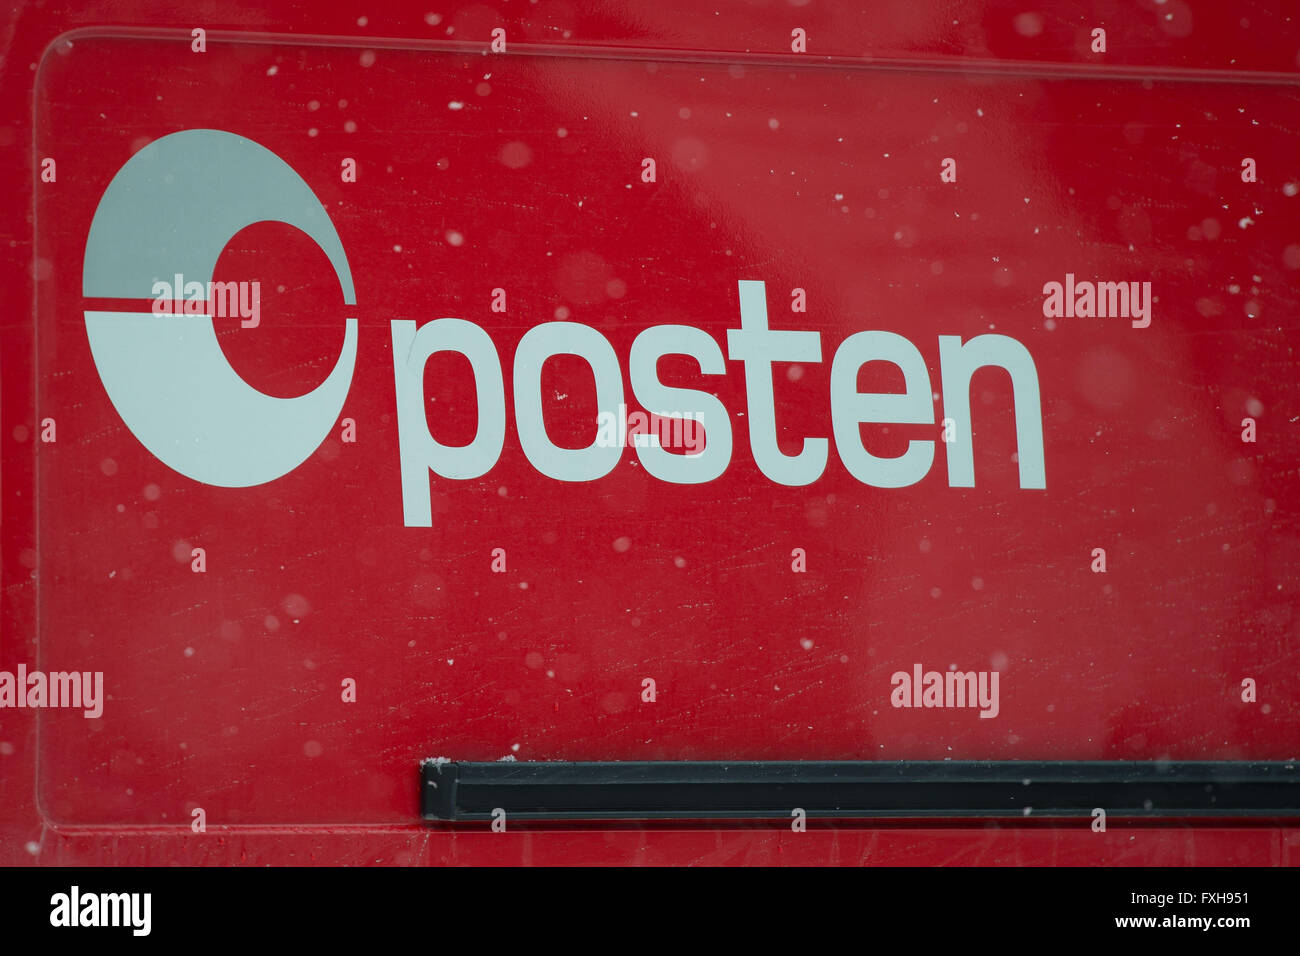 Posten Norwegian postal service. Stock Photo